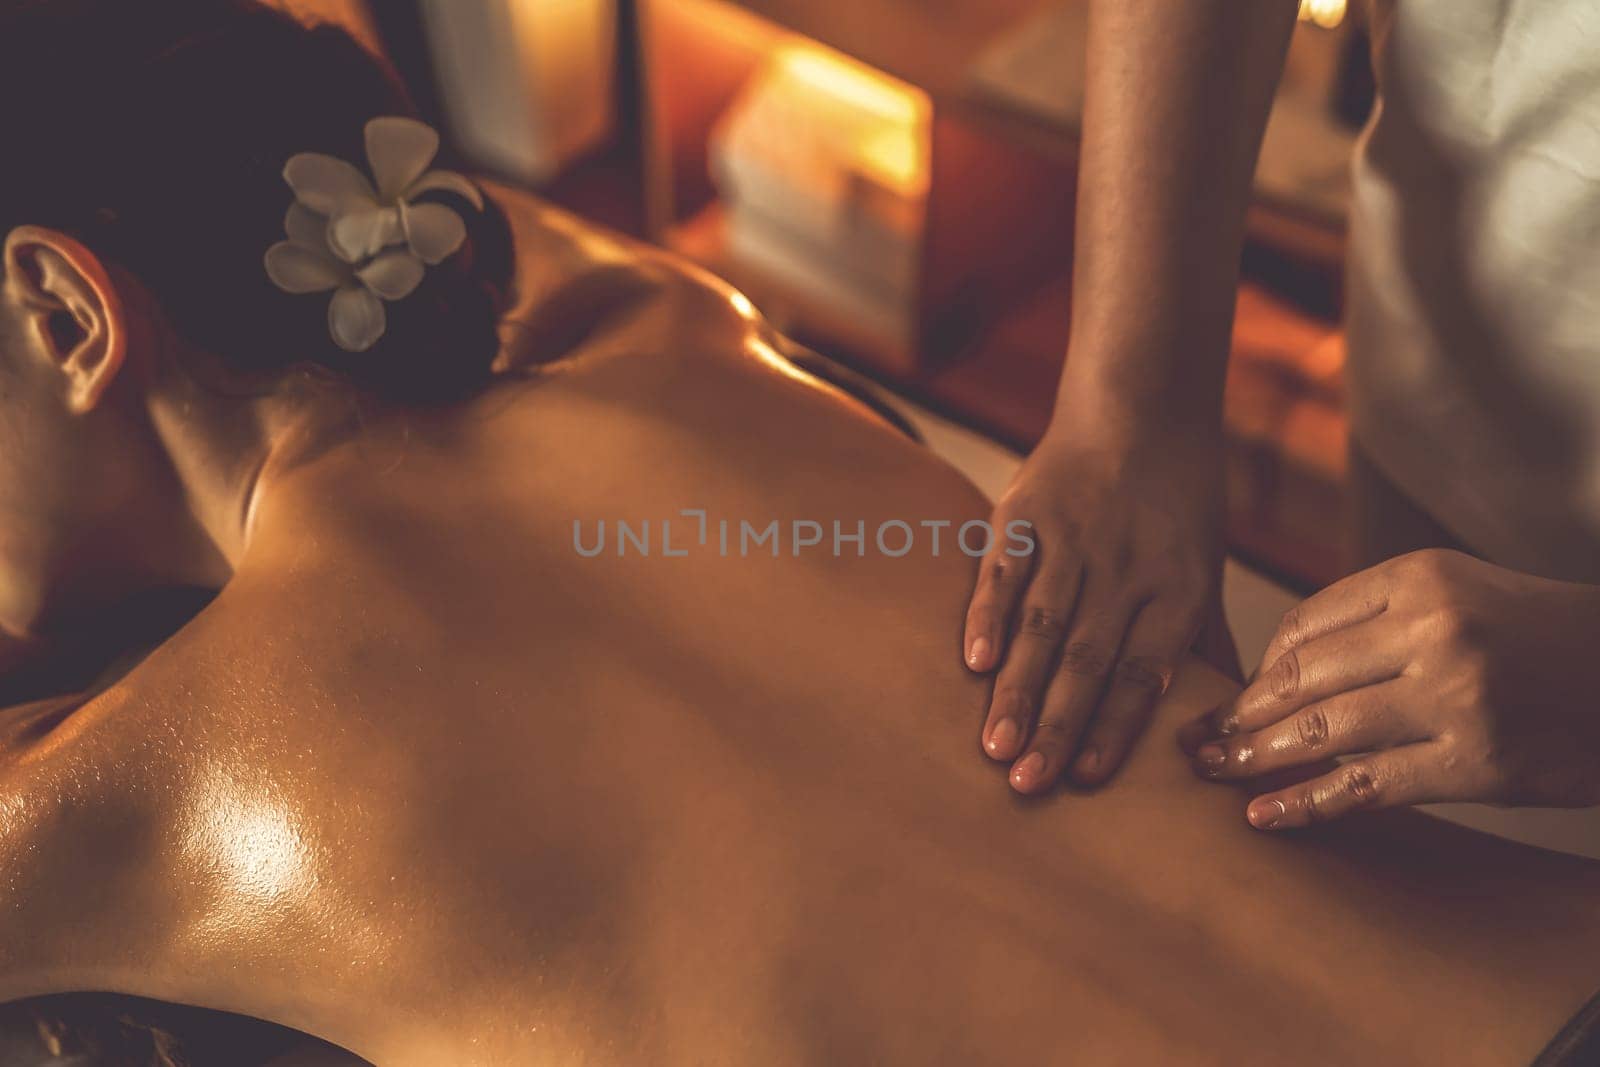 Closeup woman customer enjoying relaxing anti-stress massage. Quiescent by biancoblue